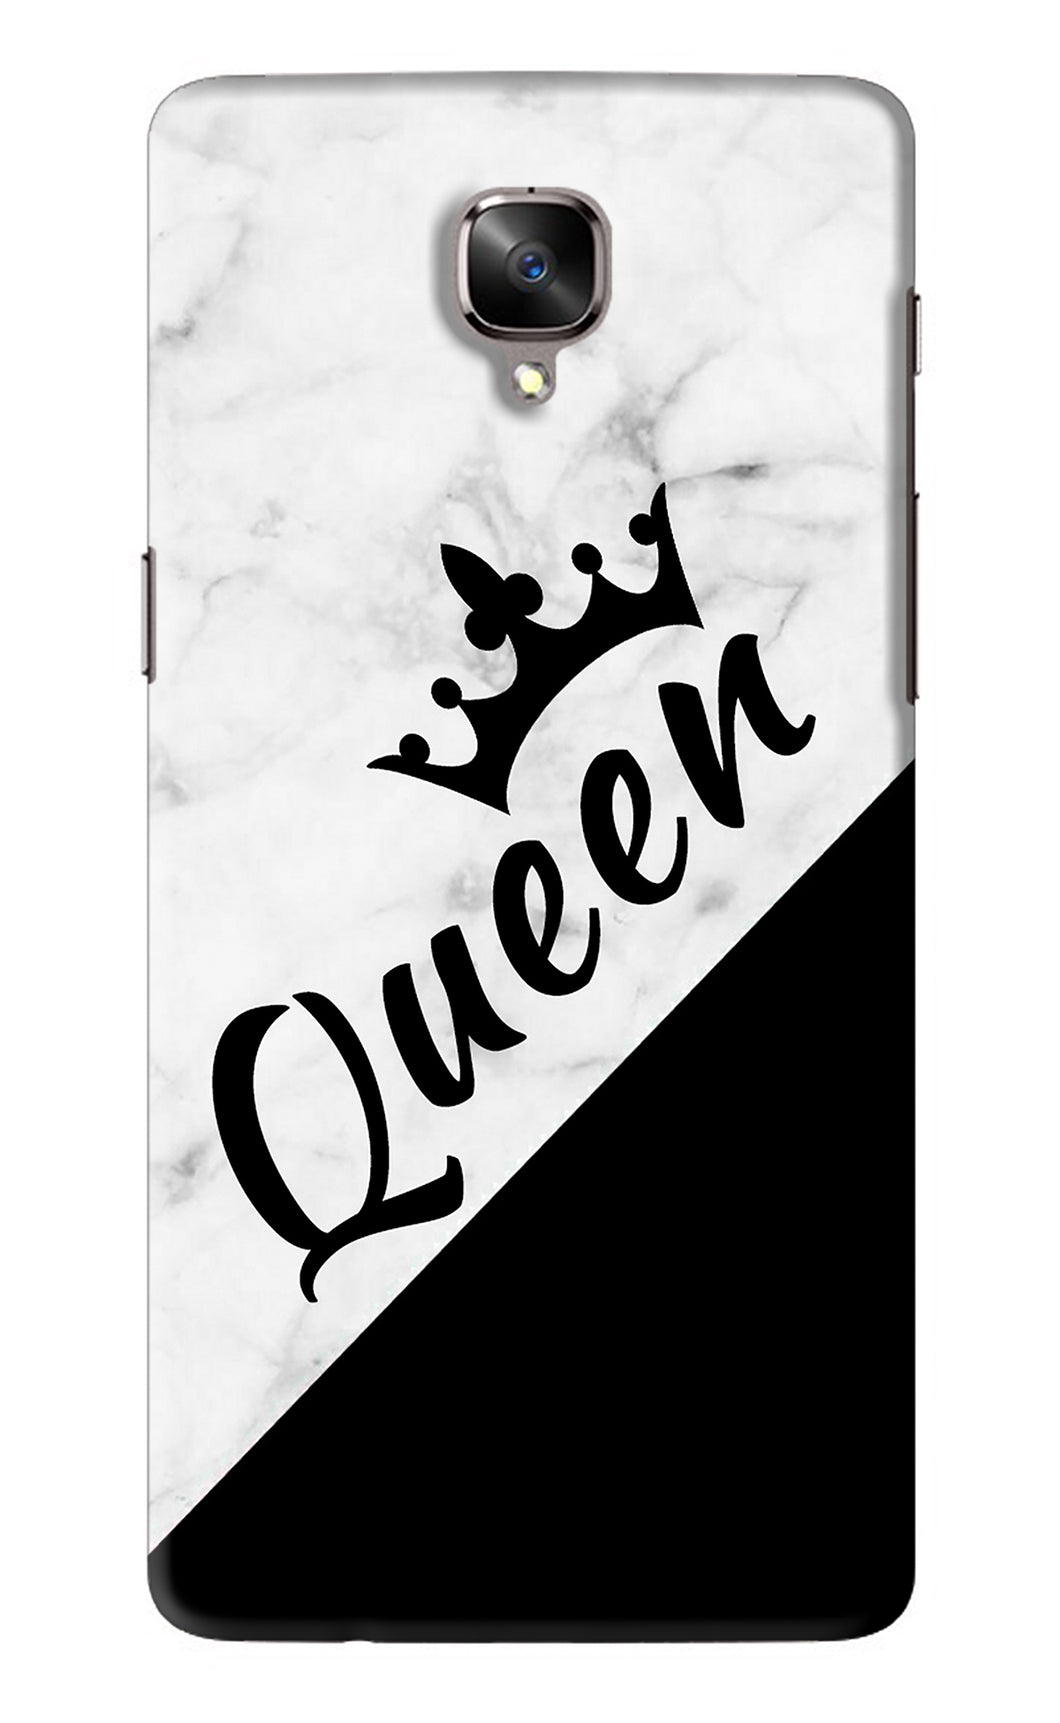 Queen OnePlus 3 Back Skin Wrap